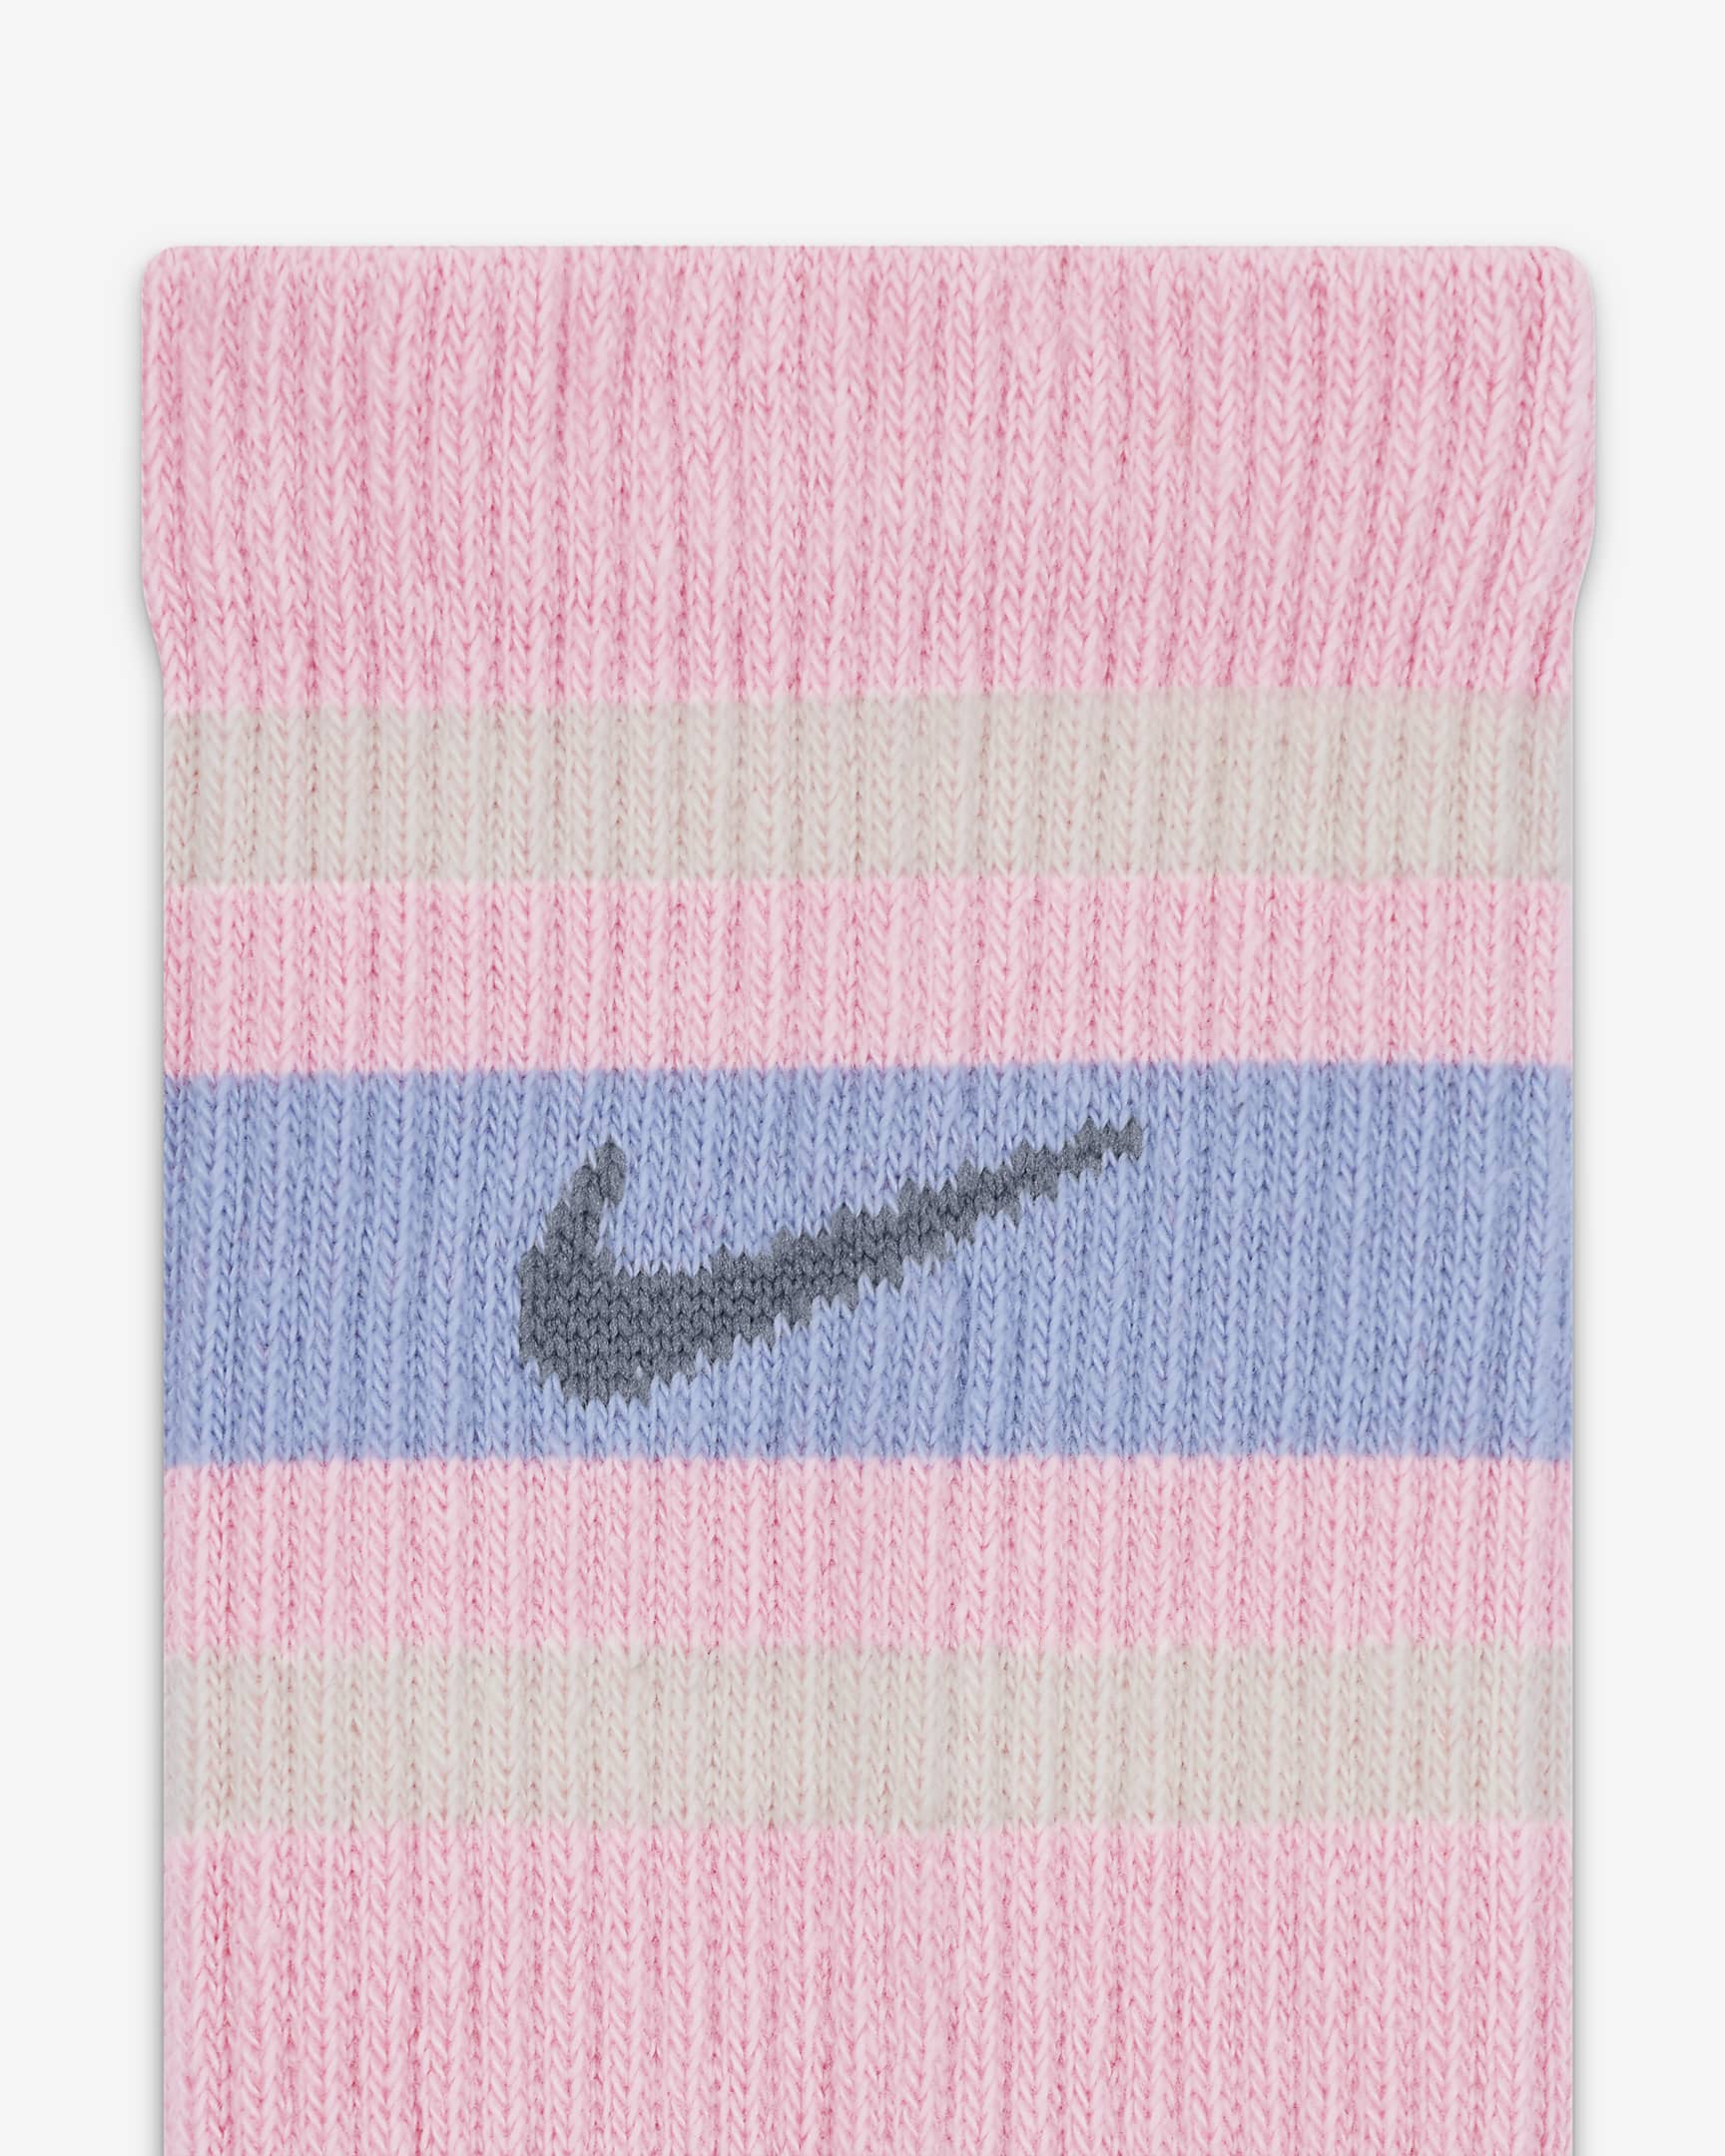 Nike Everyday Plus Cushioned Crew Socks (6 Pairs). Nike ID